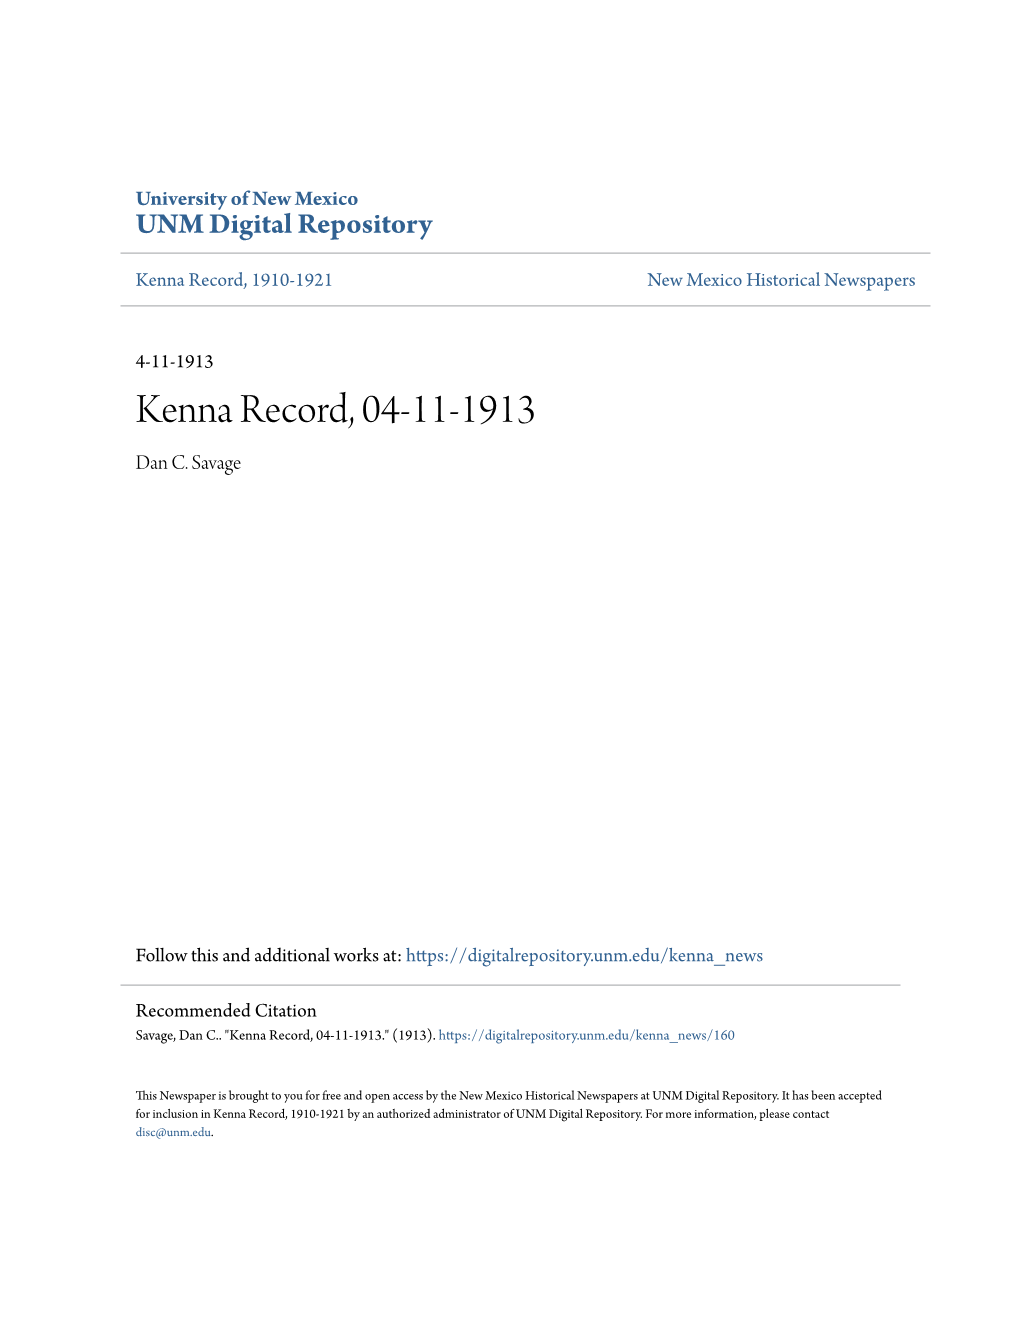 Kenna Record, 04-11-1913 Dan C